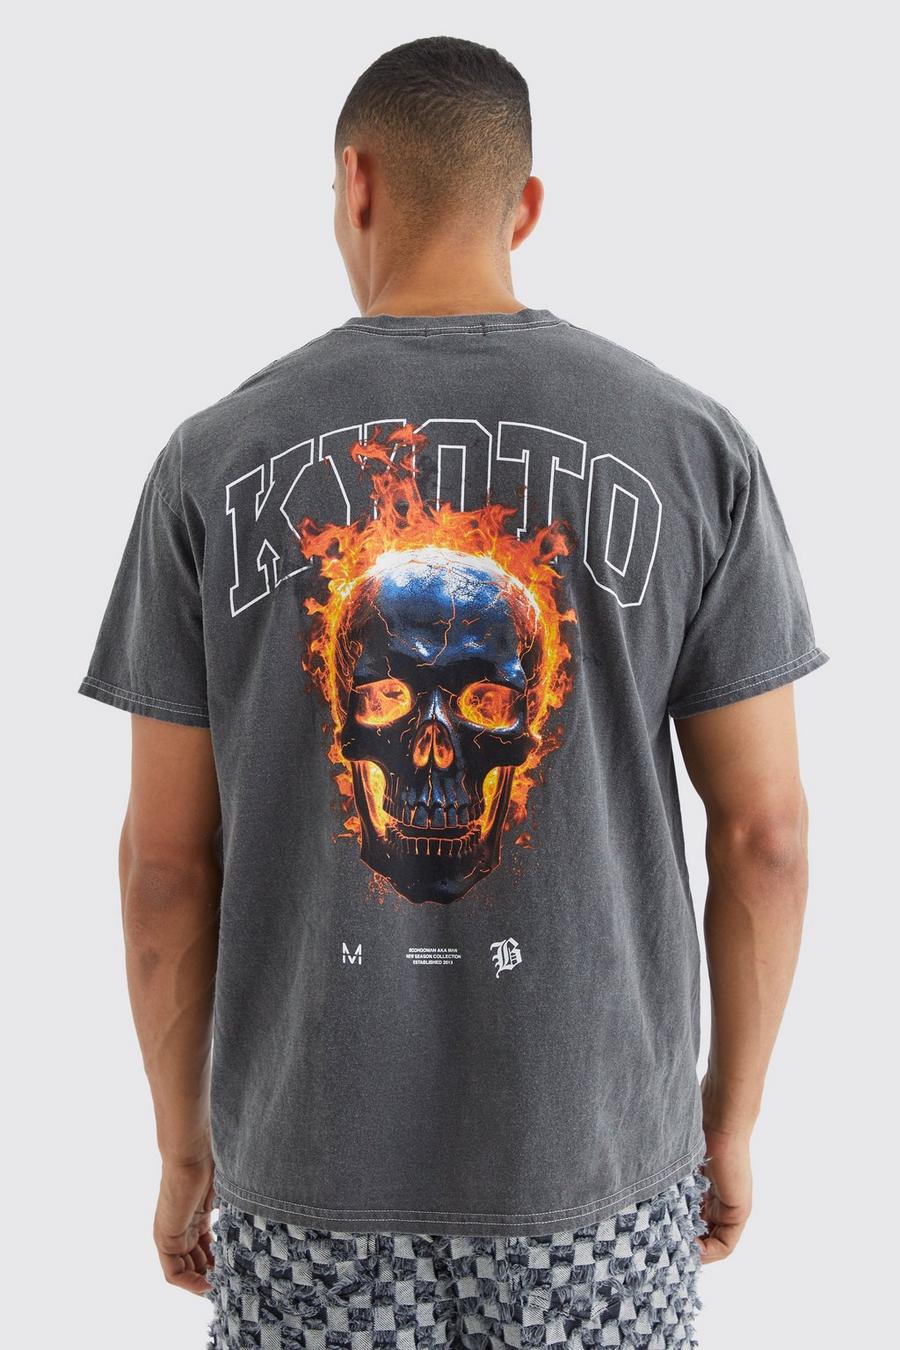 Charcoal grey Oversized Skull Wash Graphic T-shirt